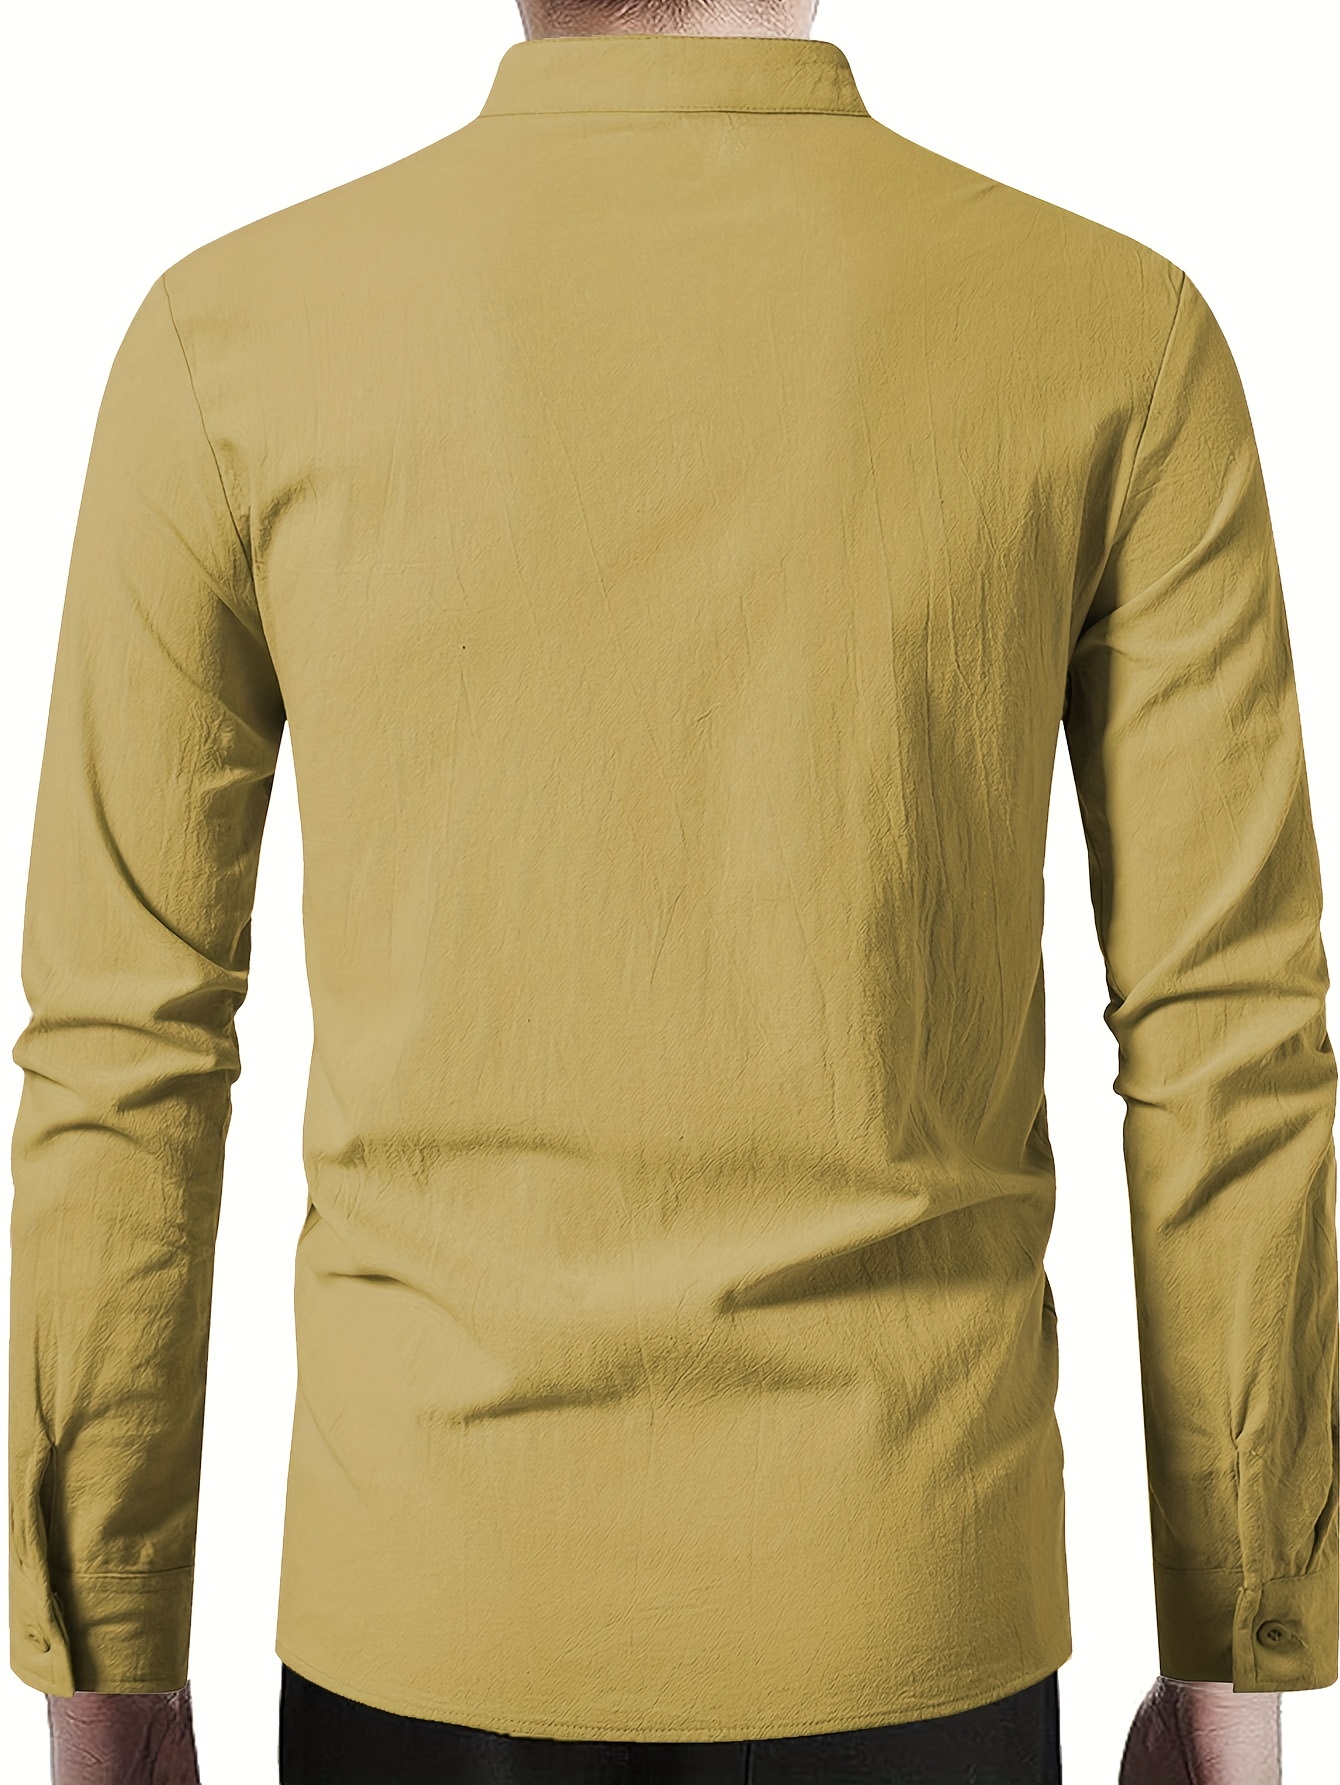 Camiseta de manga larga en rayas amarilla 1927 Henley Shirt long